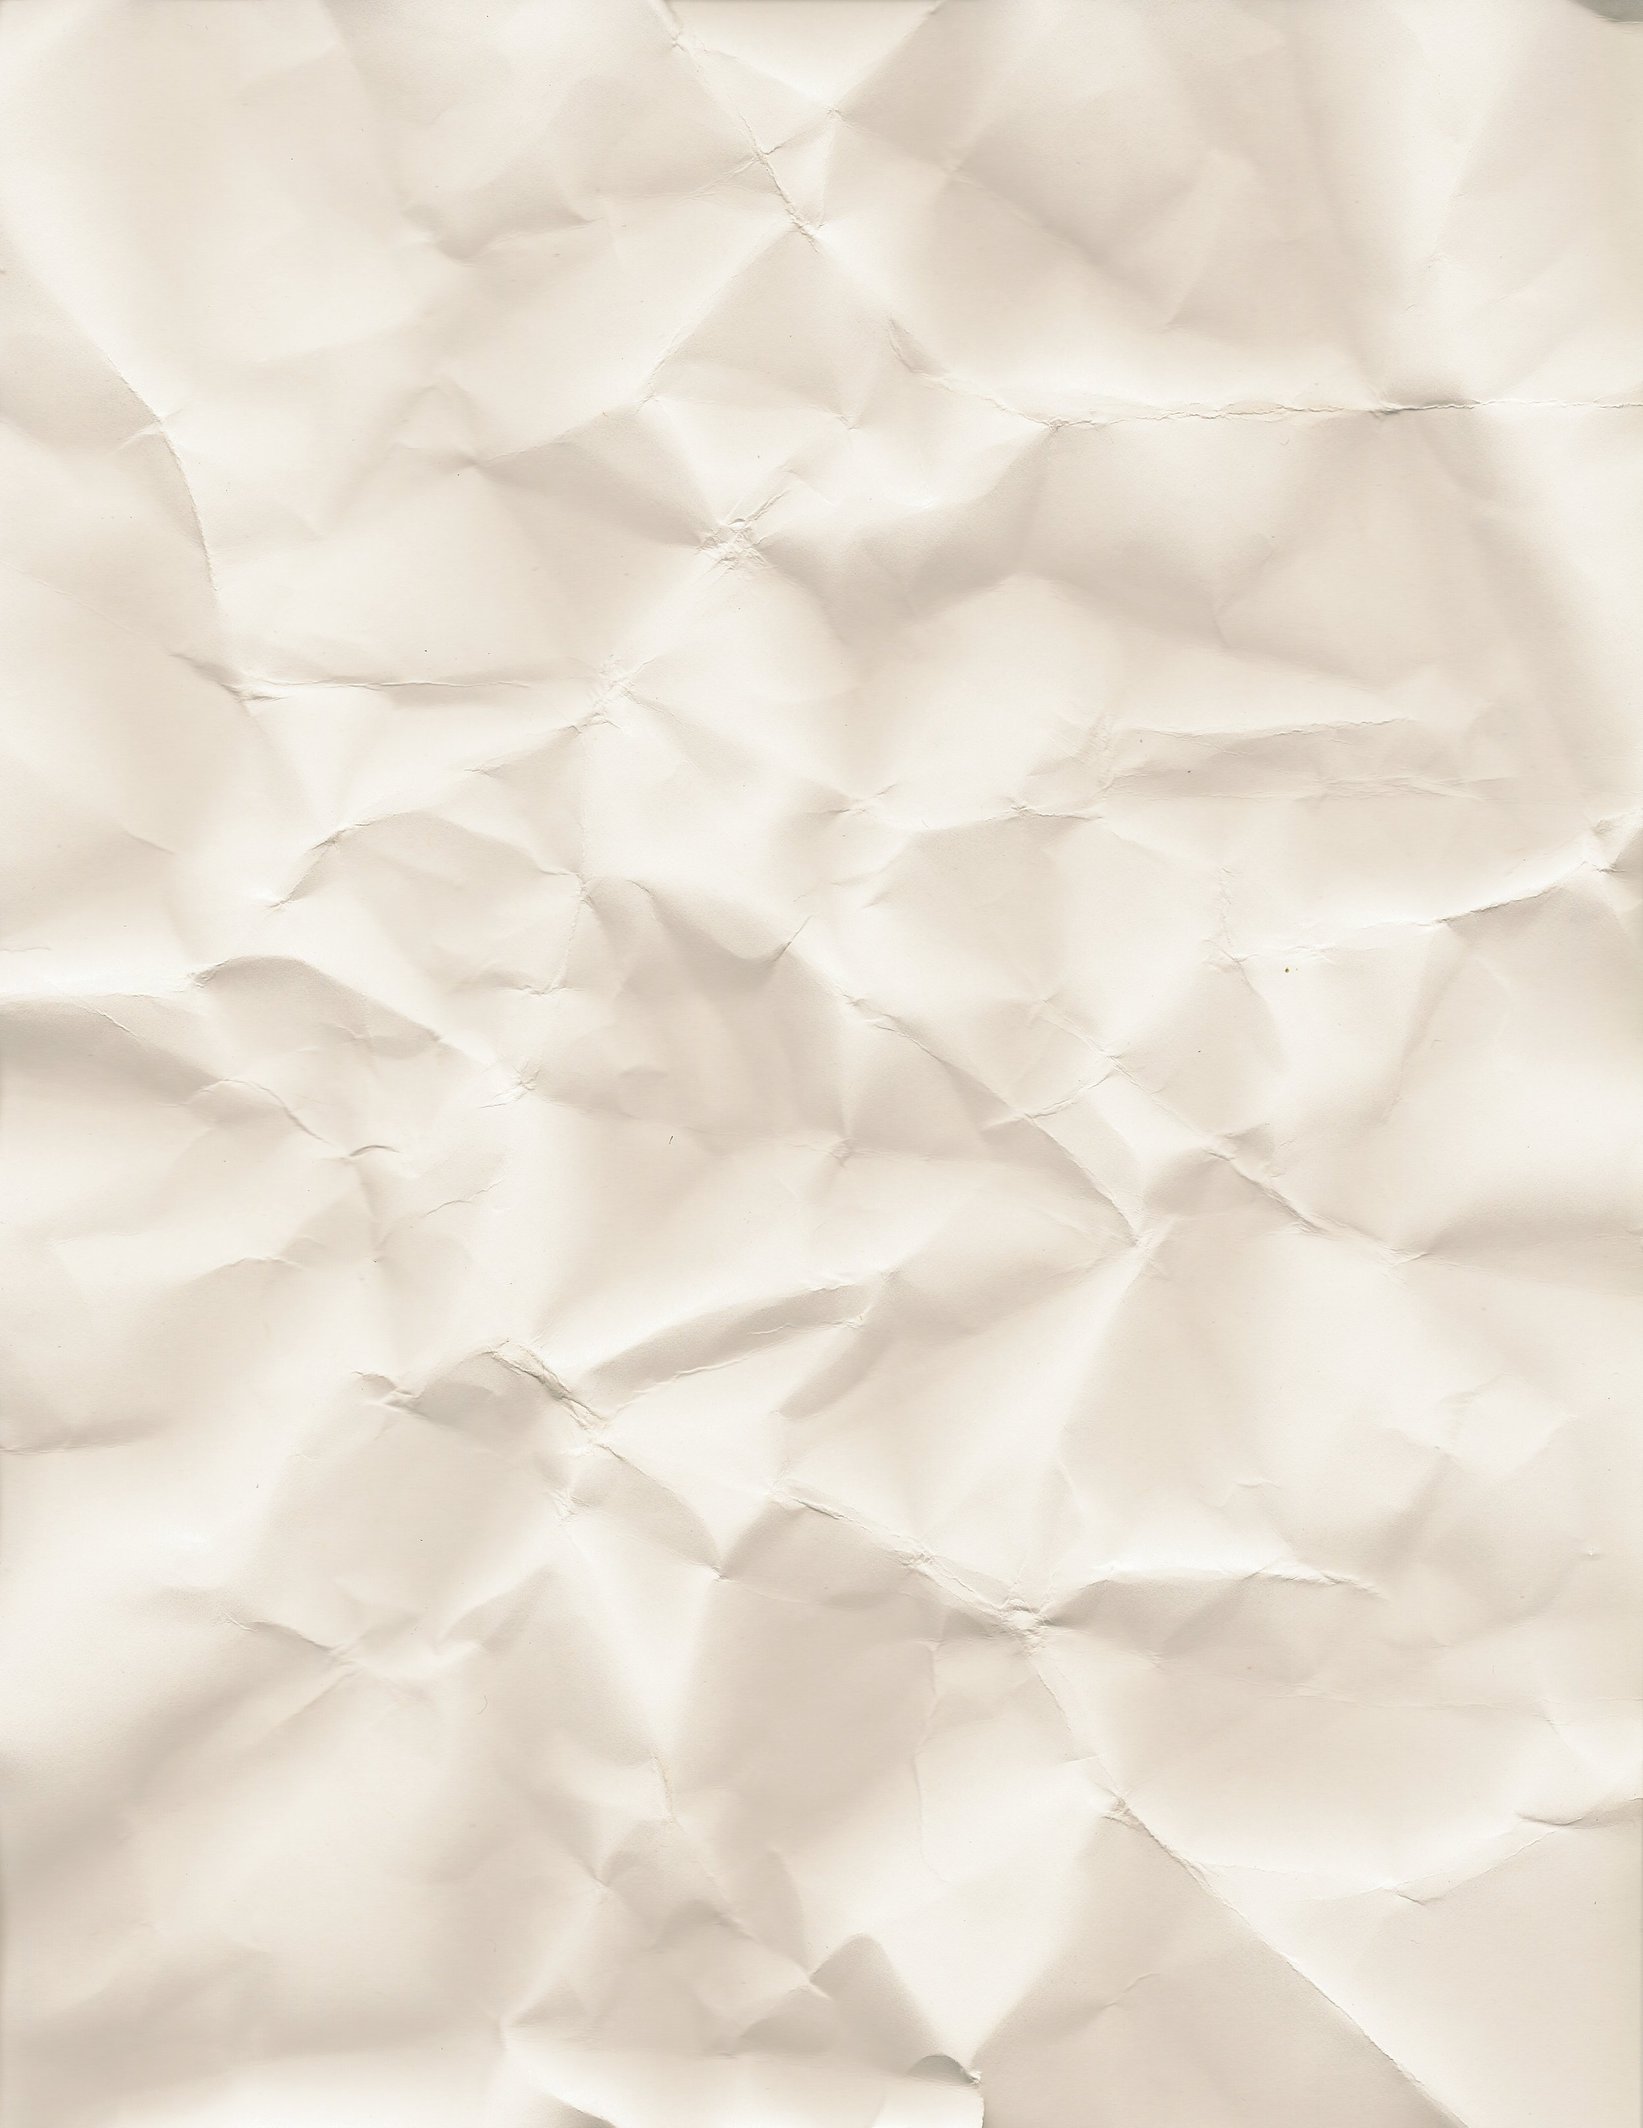 Crumpled Paper Texture hi-res by ze-r-o on DeviantArt